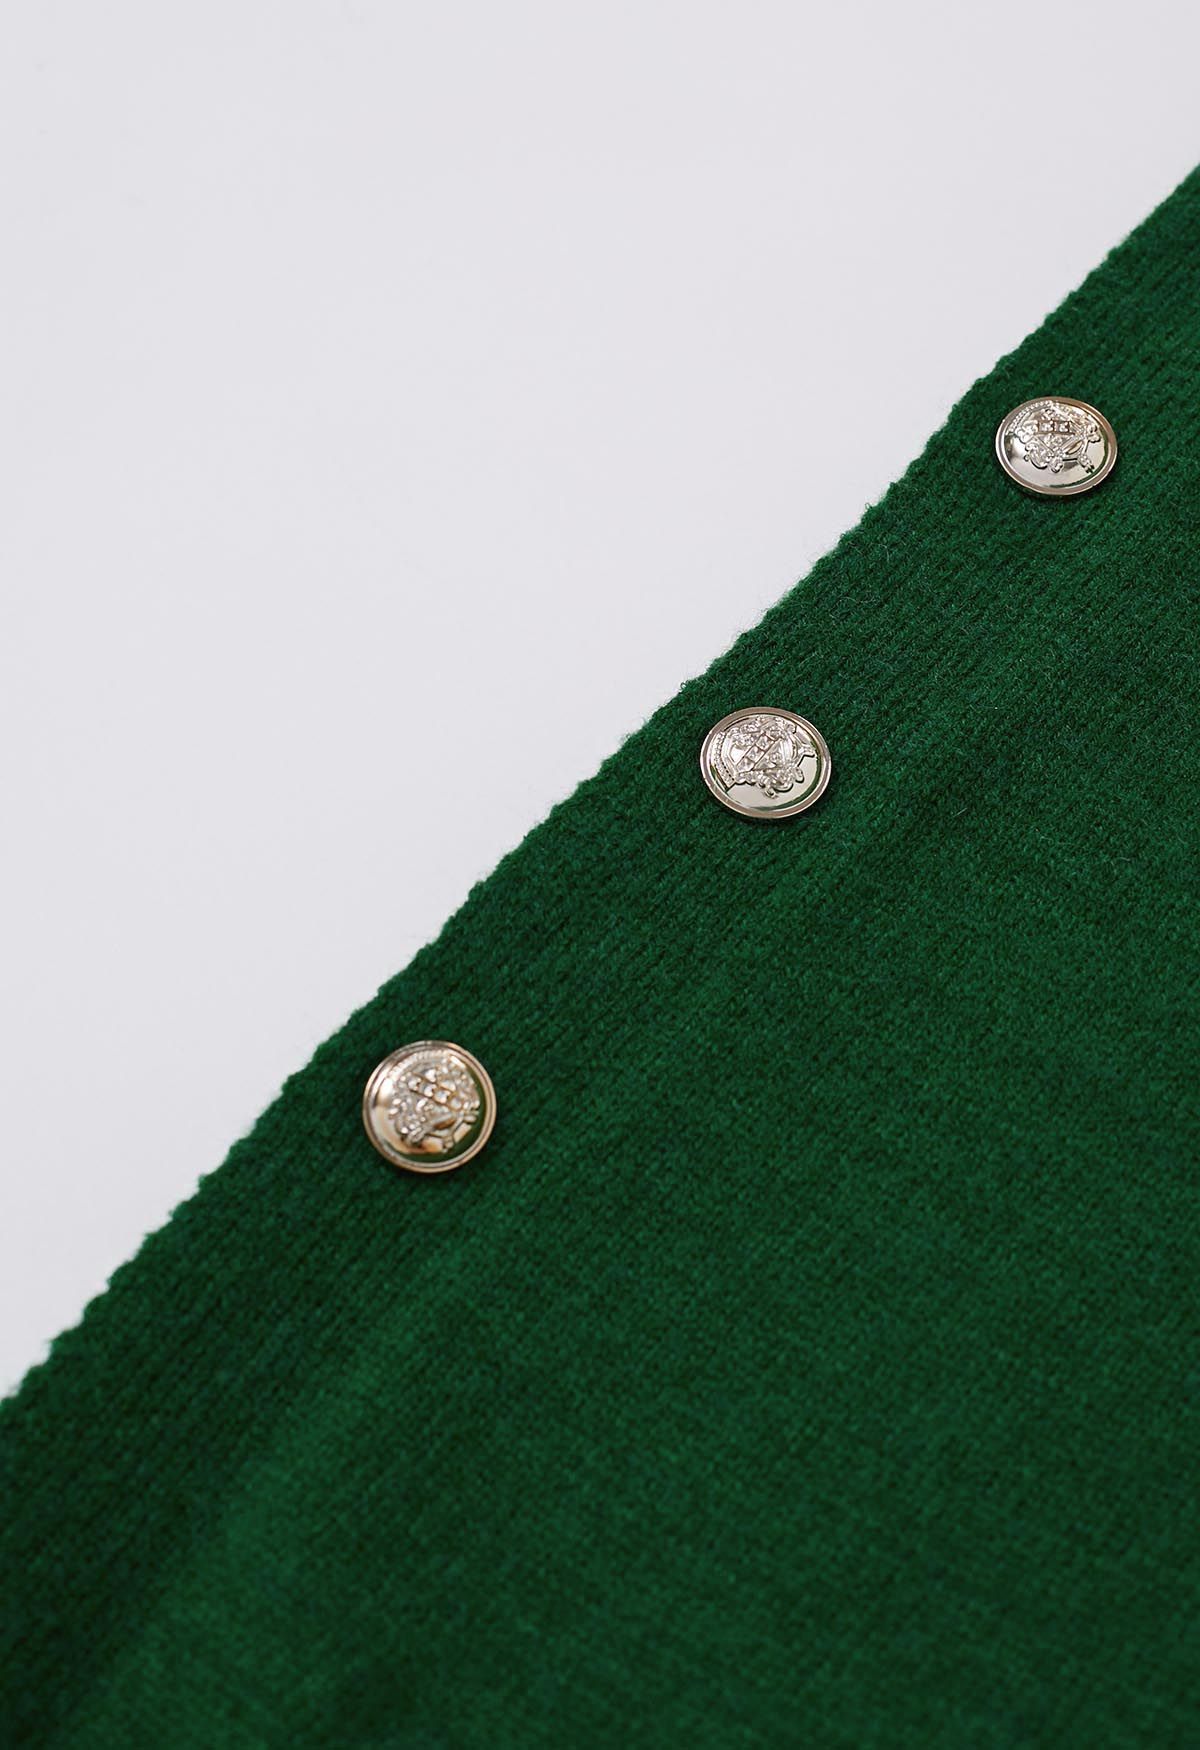 Turtleneck Belted Knit Midi Dress in Green